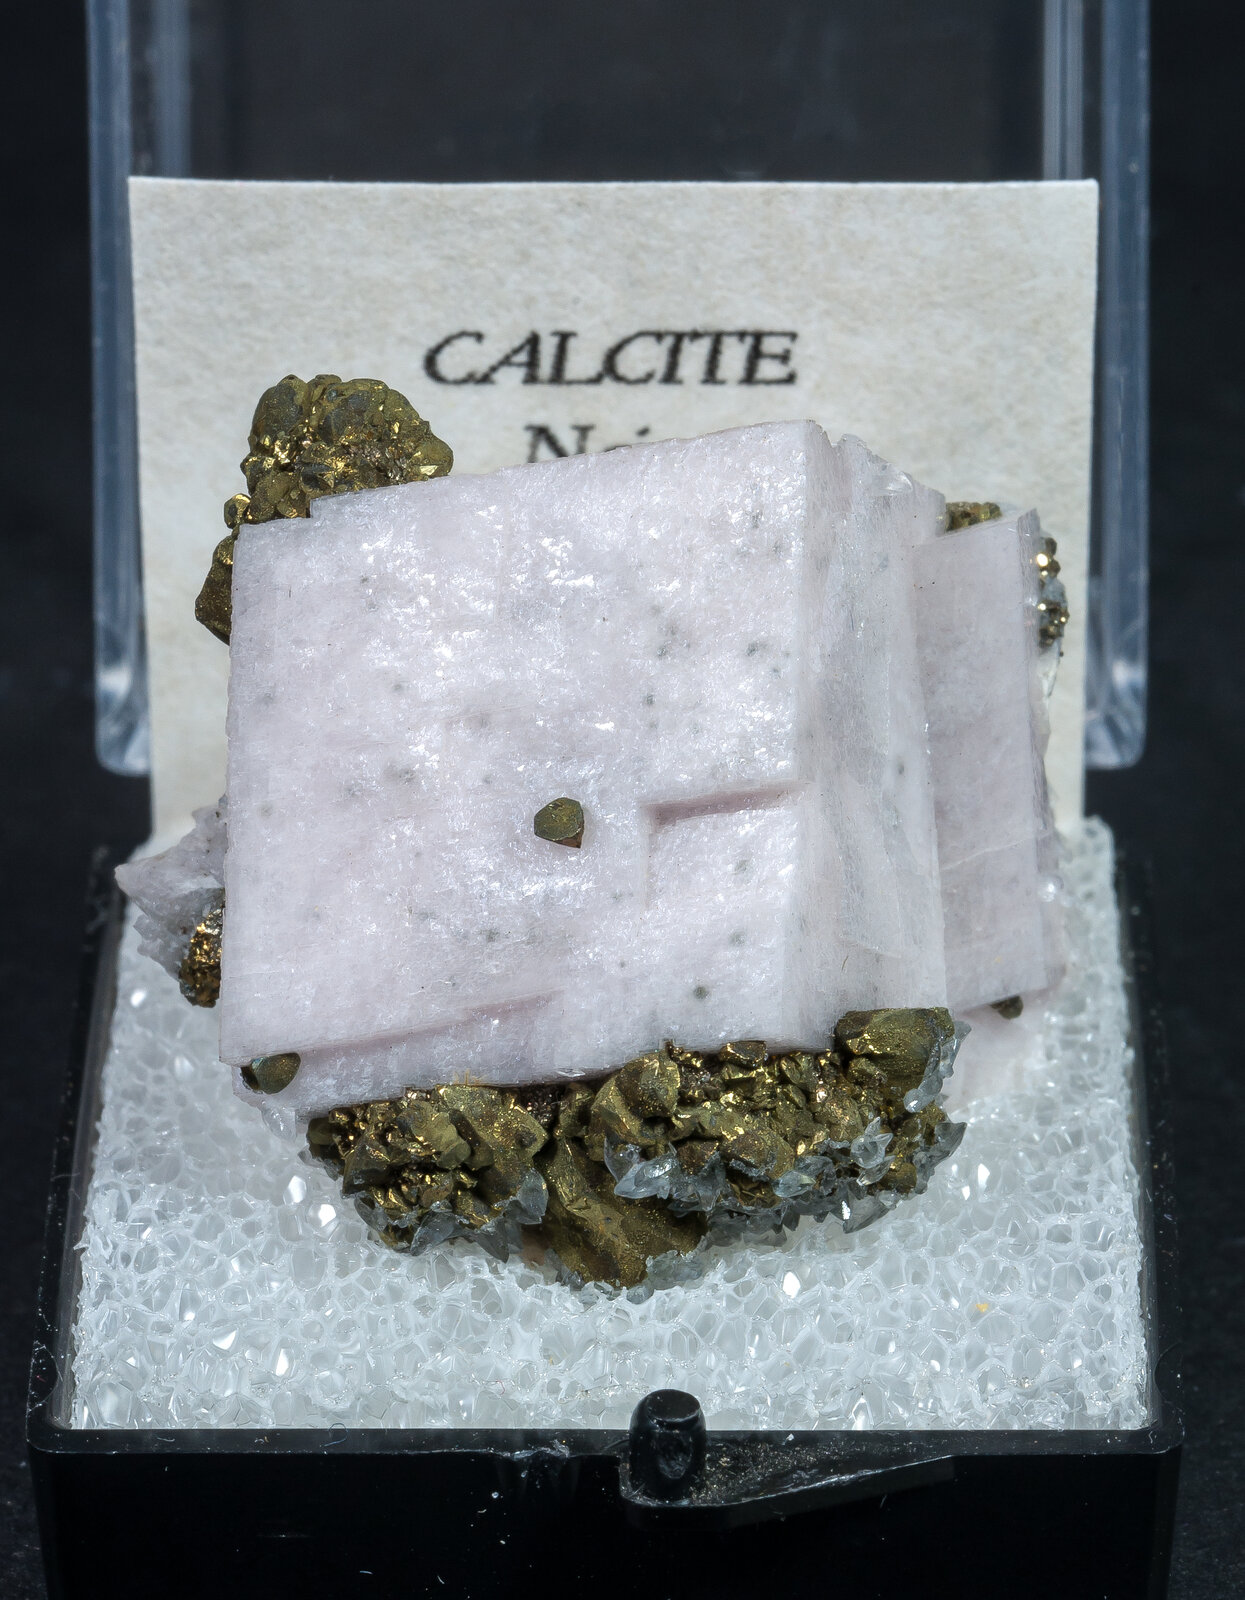 specimens/s_imagesAN0/Calcite-MF11AN0f1.jpg